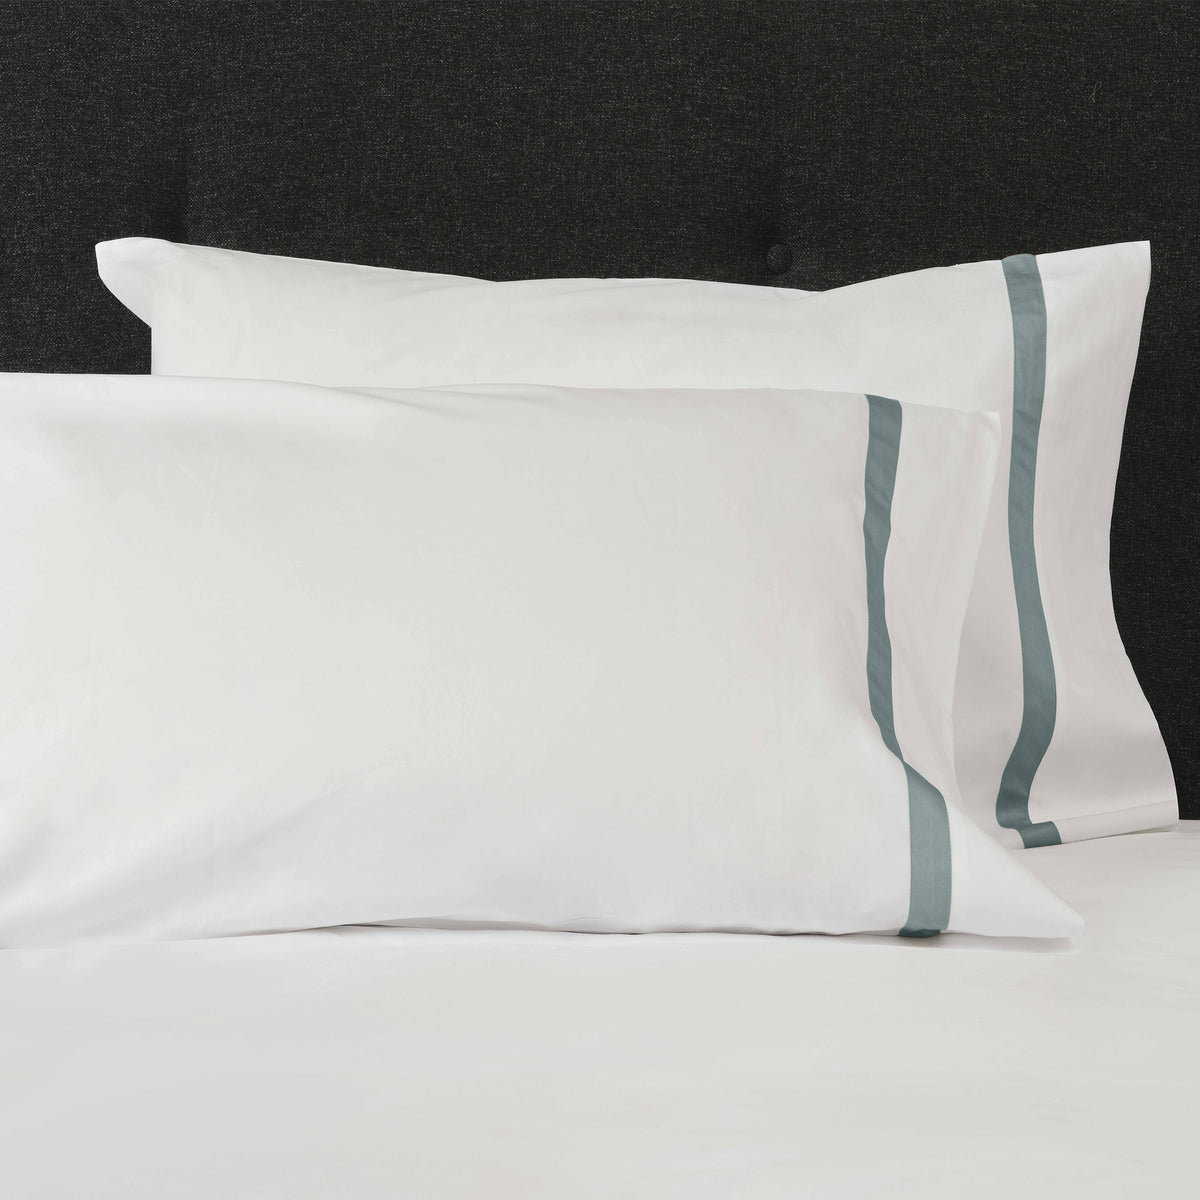 Pair of Pillowcases of Signoria Pegaso Bedding in White/Wilton Blue Color